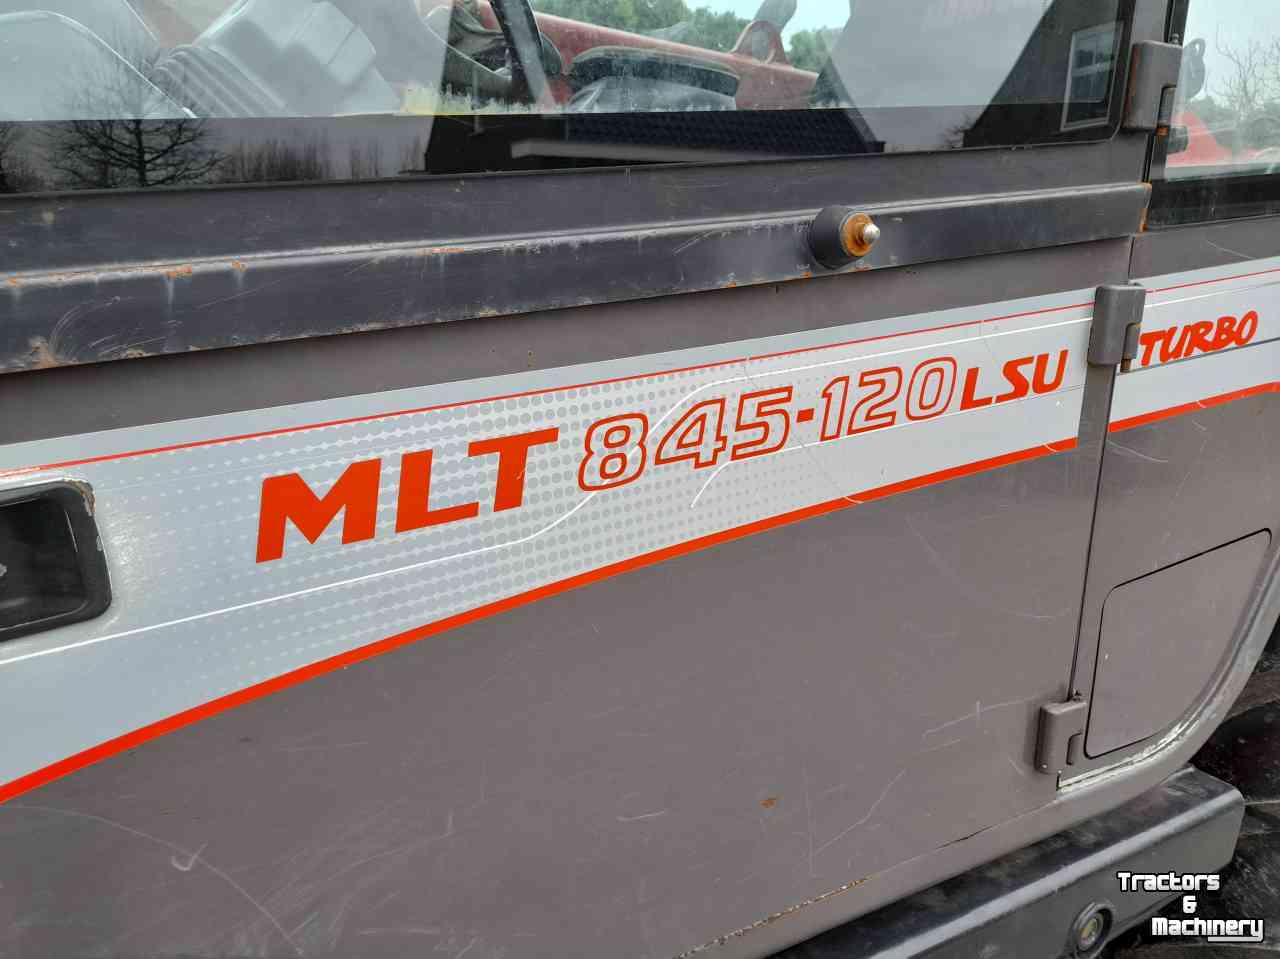 Verreiker Manitou MLT 845-120 LSU verreiker Telescopic loader